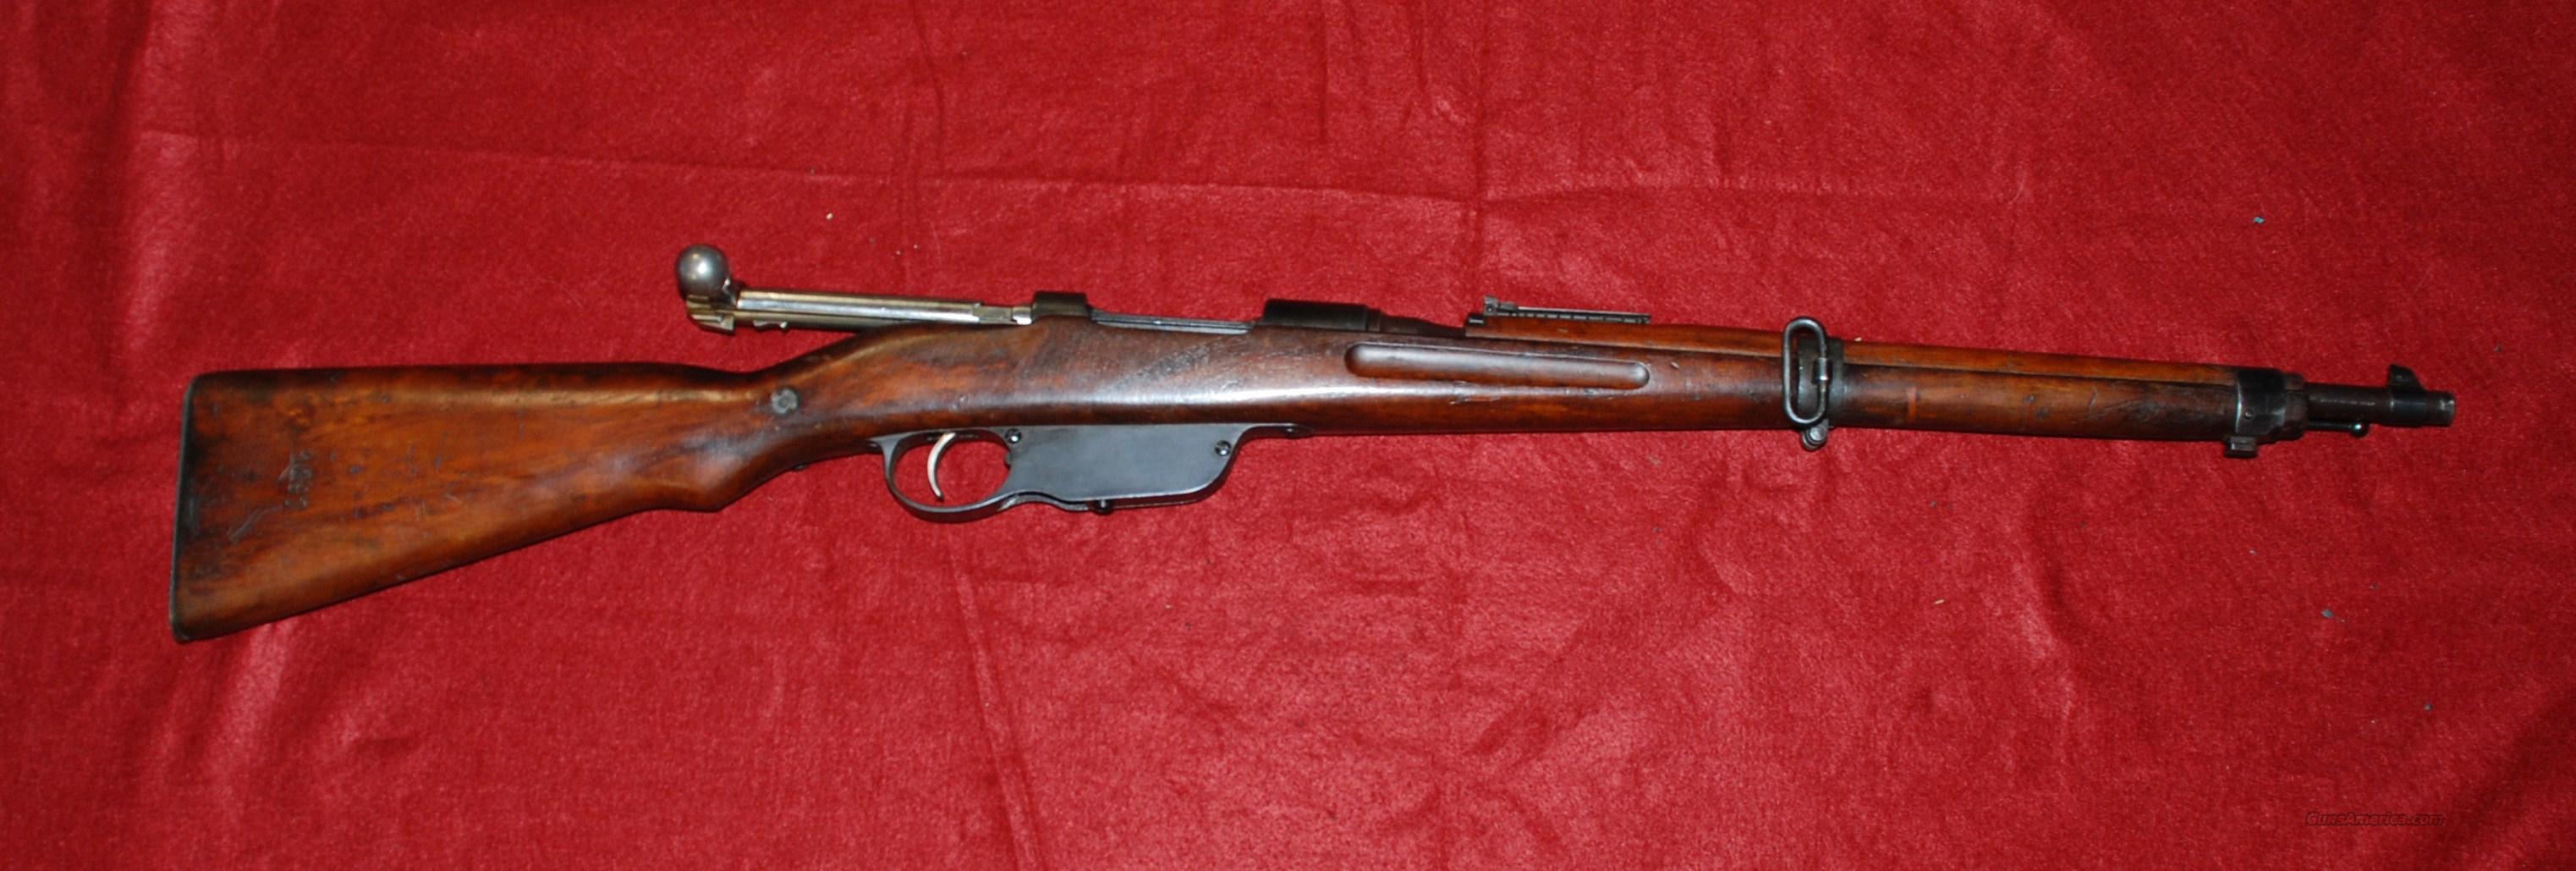 Steyr m95 carbine 8x56r